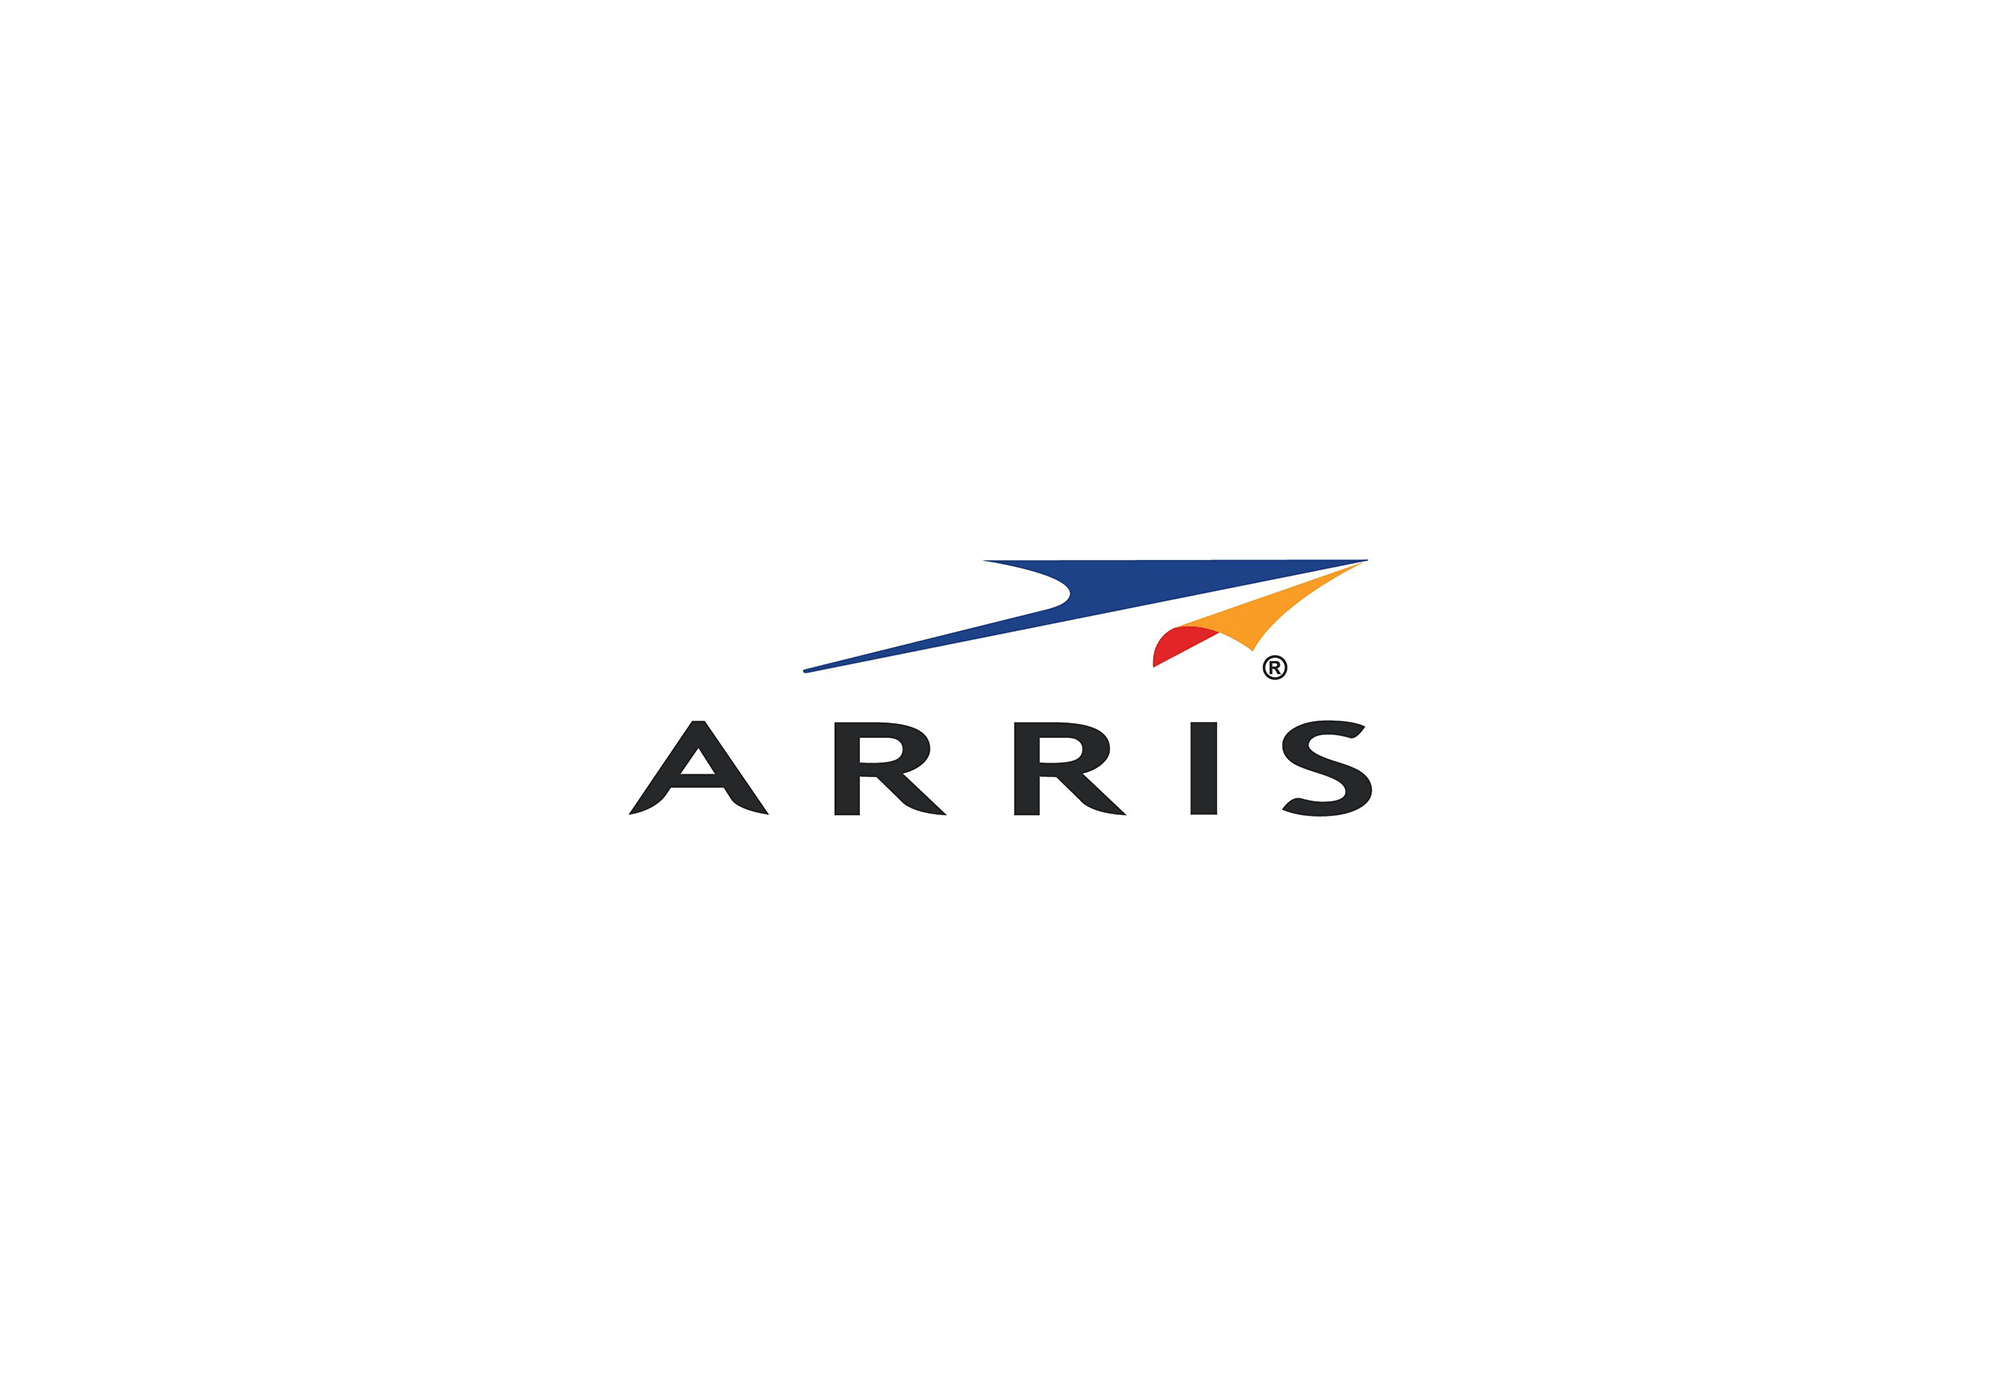 Arris Logo - Arris International logo | Dwglogo